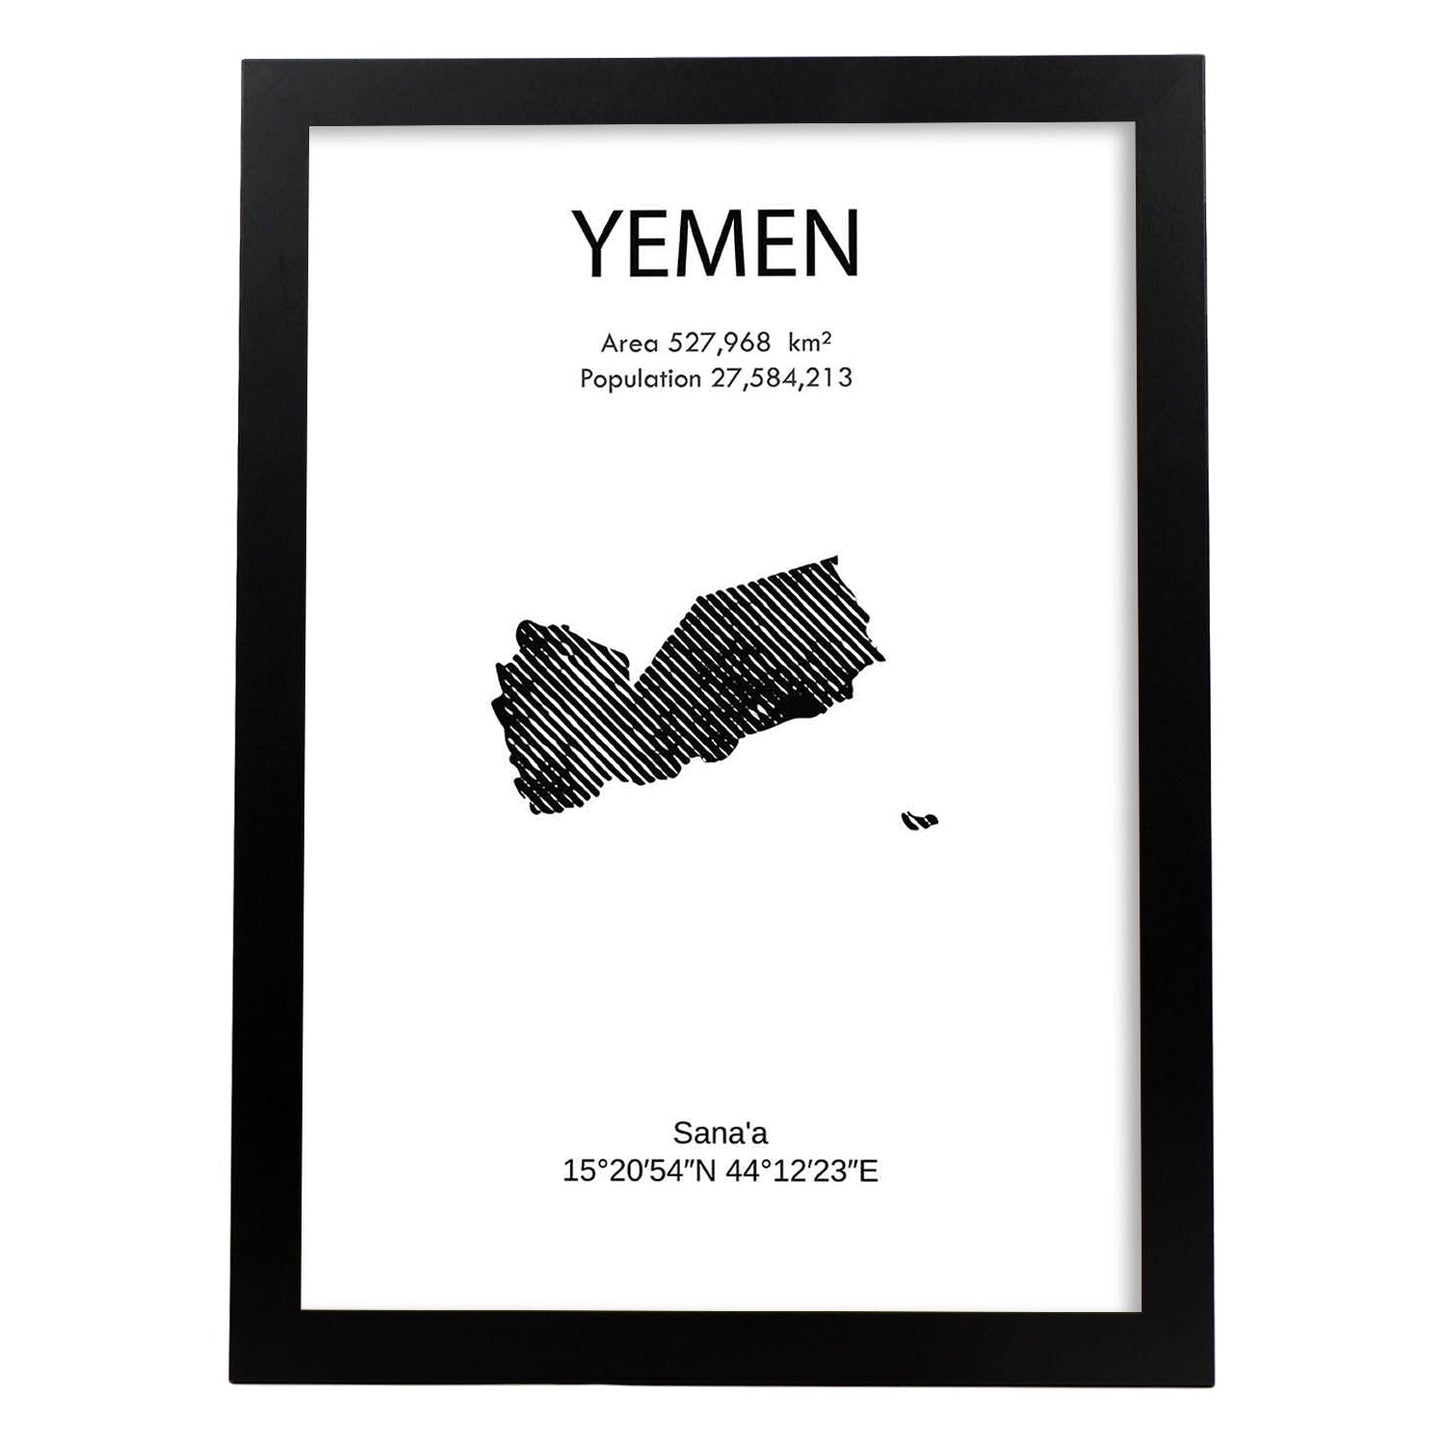 Poster de Yemen. Láminas de paises y continentes del mundo.-Artwork-Nacnic-A3-Marco Negro-Nacnic Estudio SL